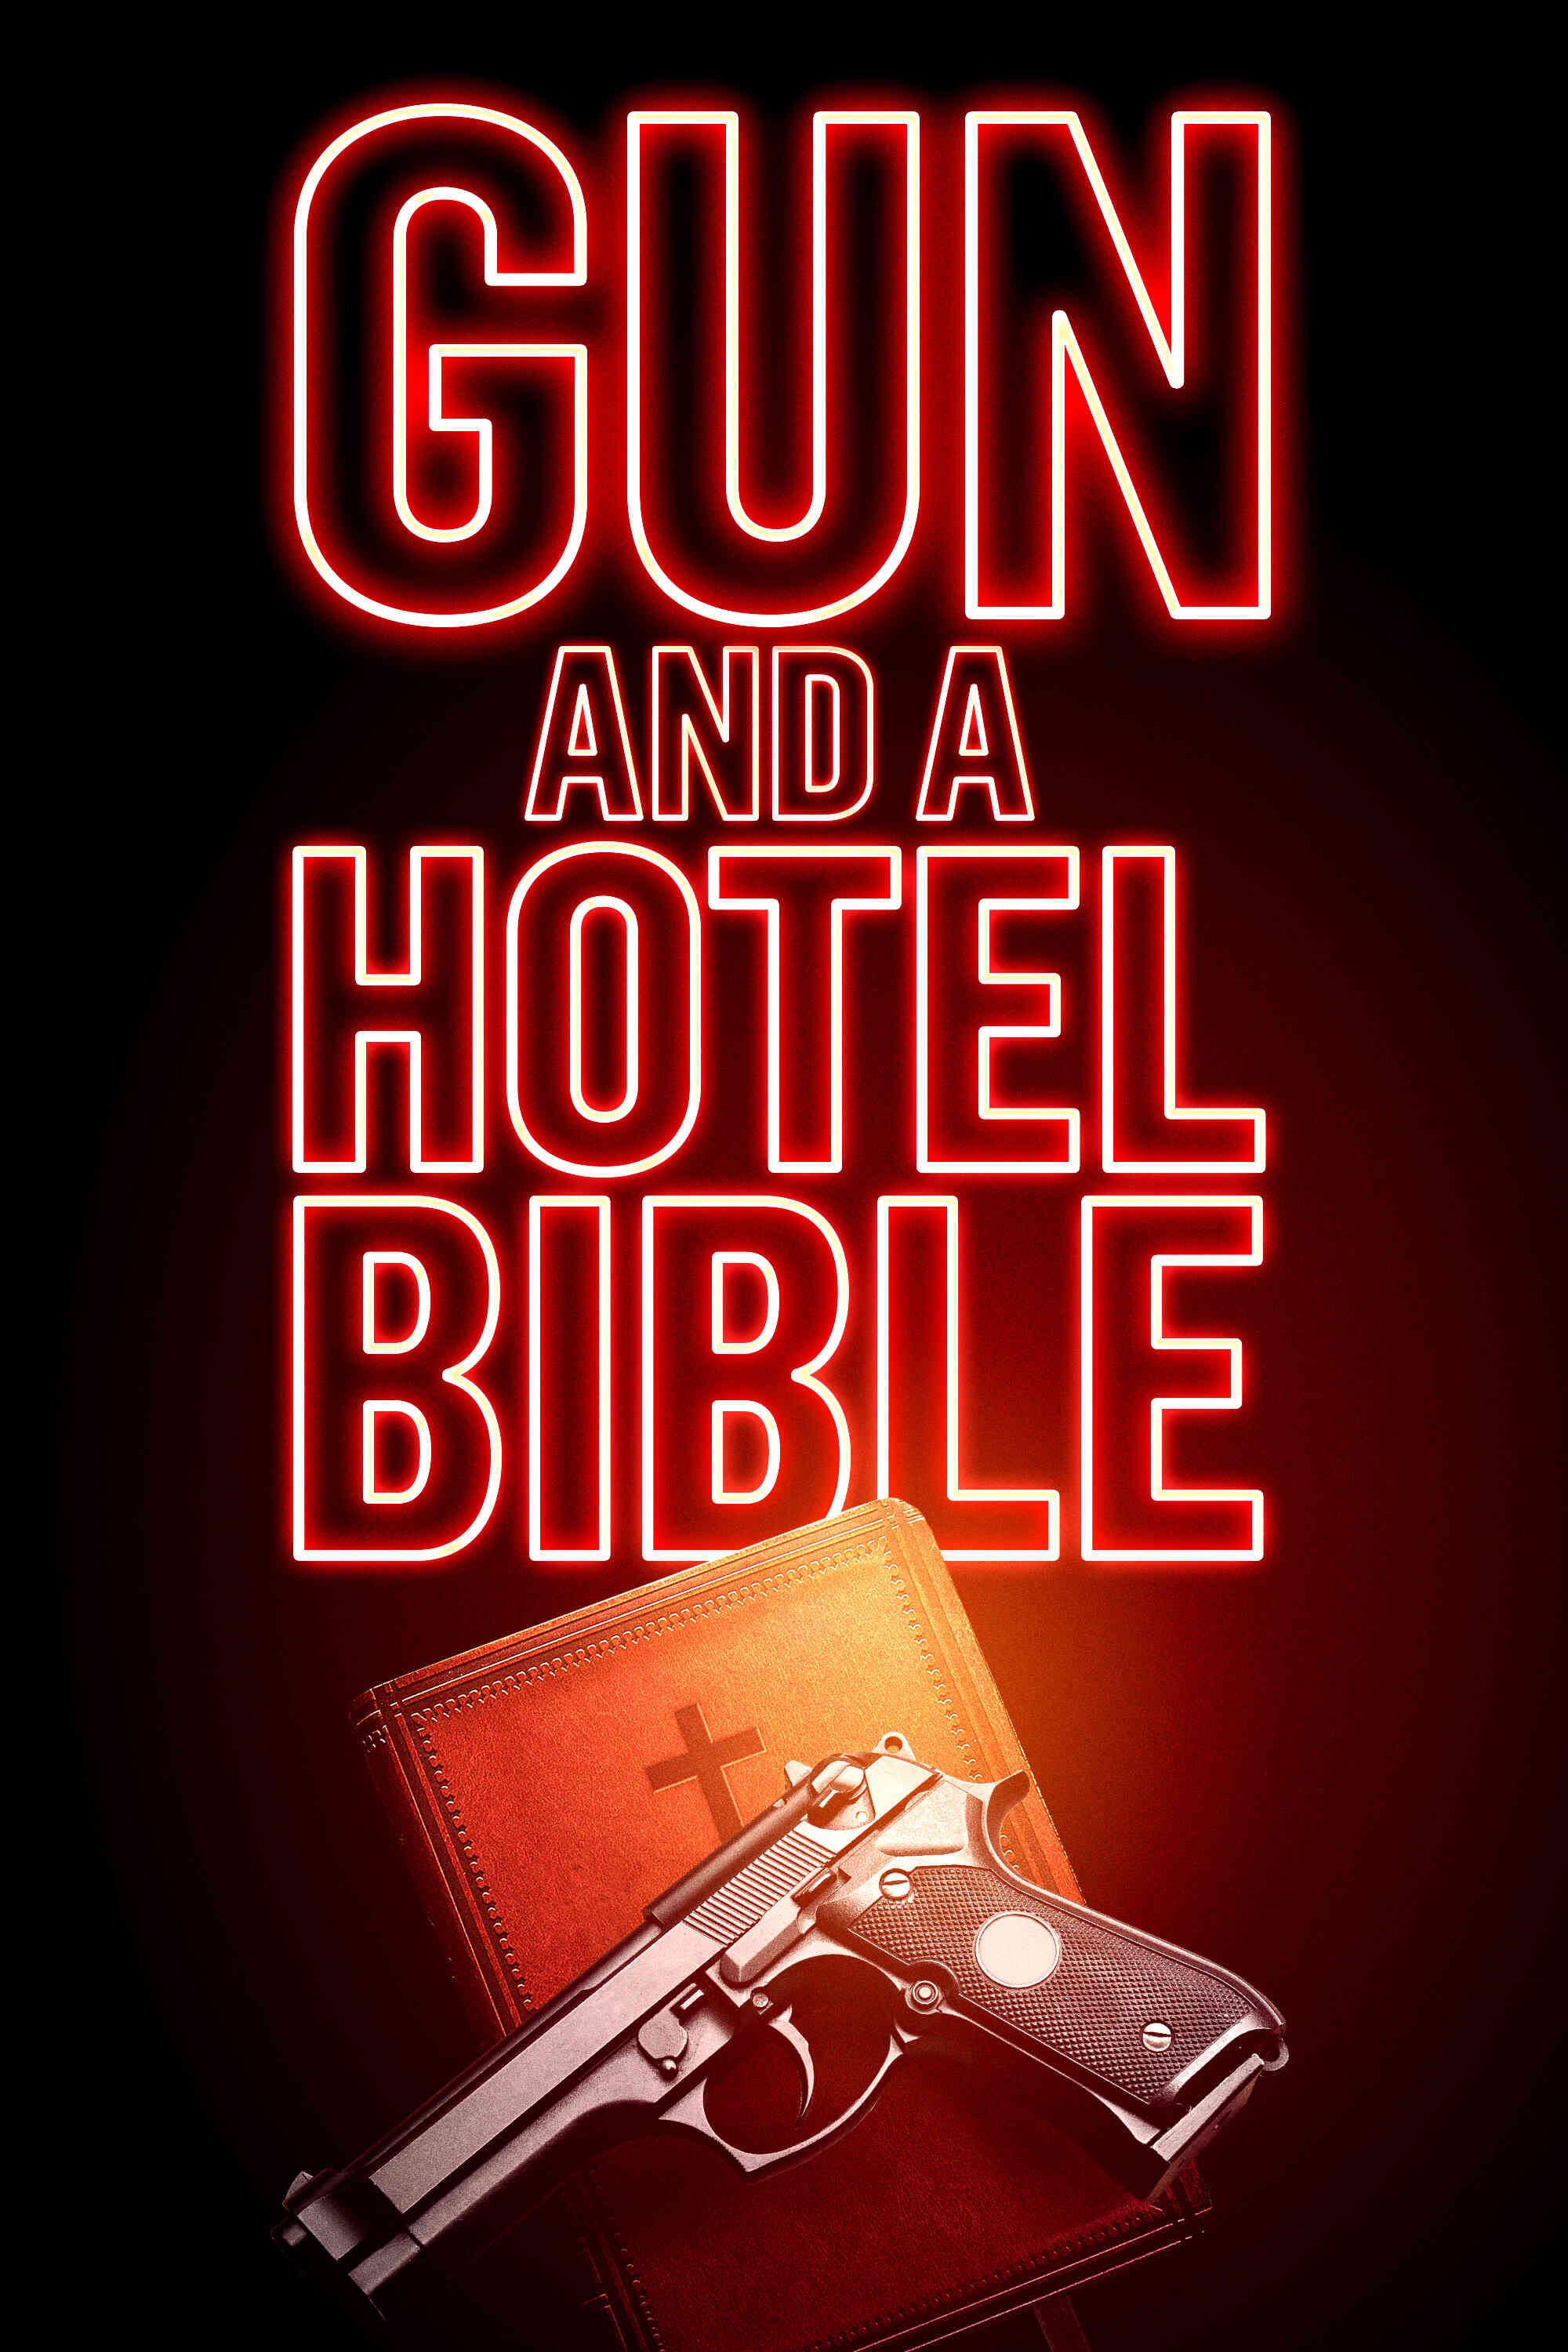 Gun and a Hotel Bible